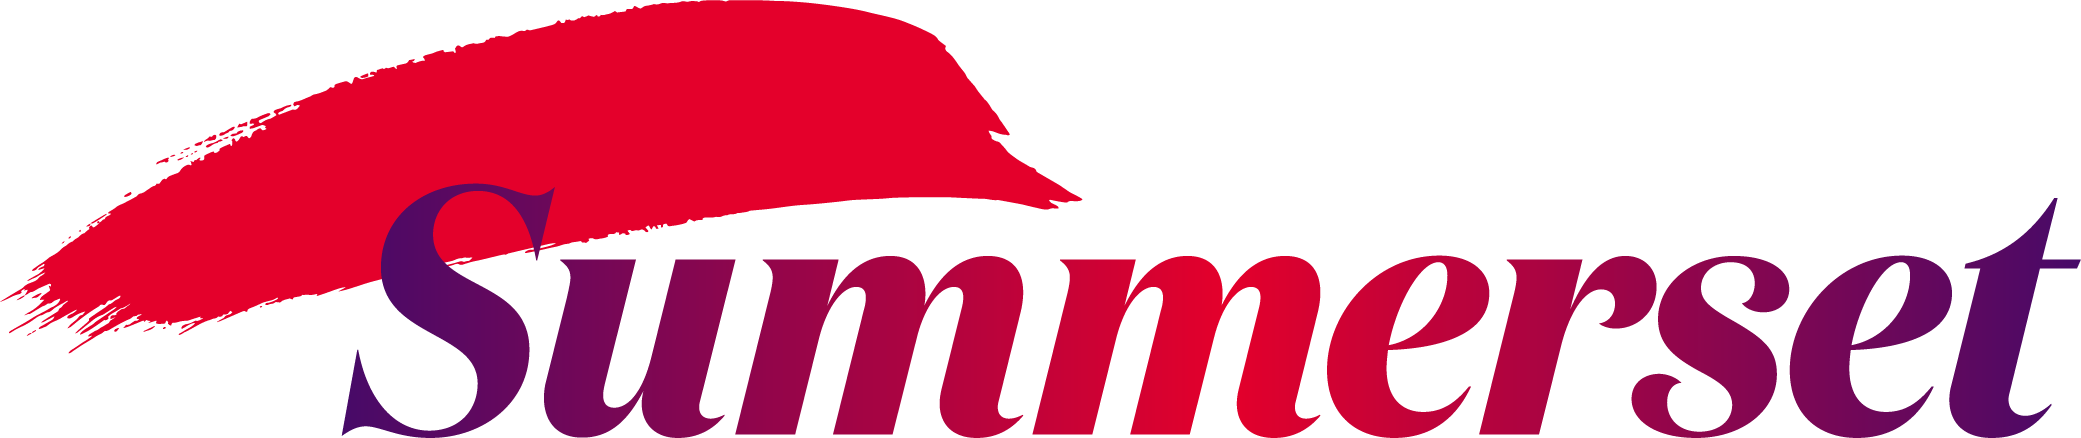 Summerset down the Lane, Hamilton logo